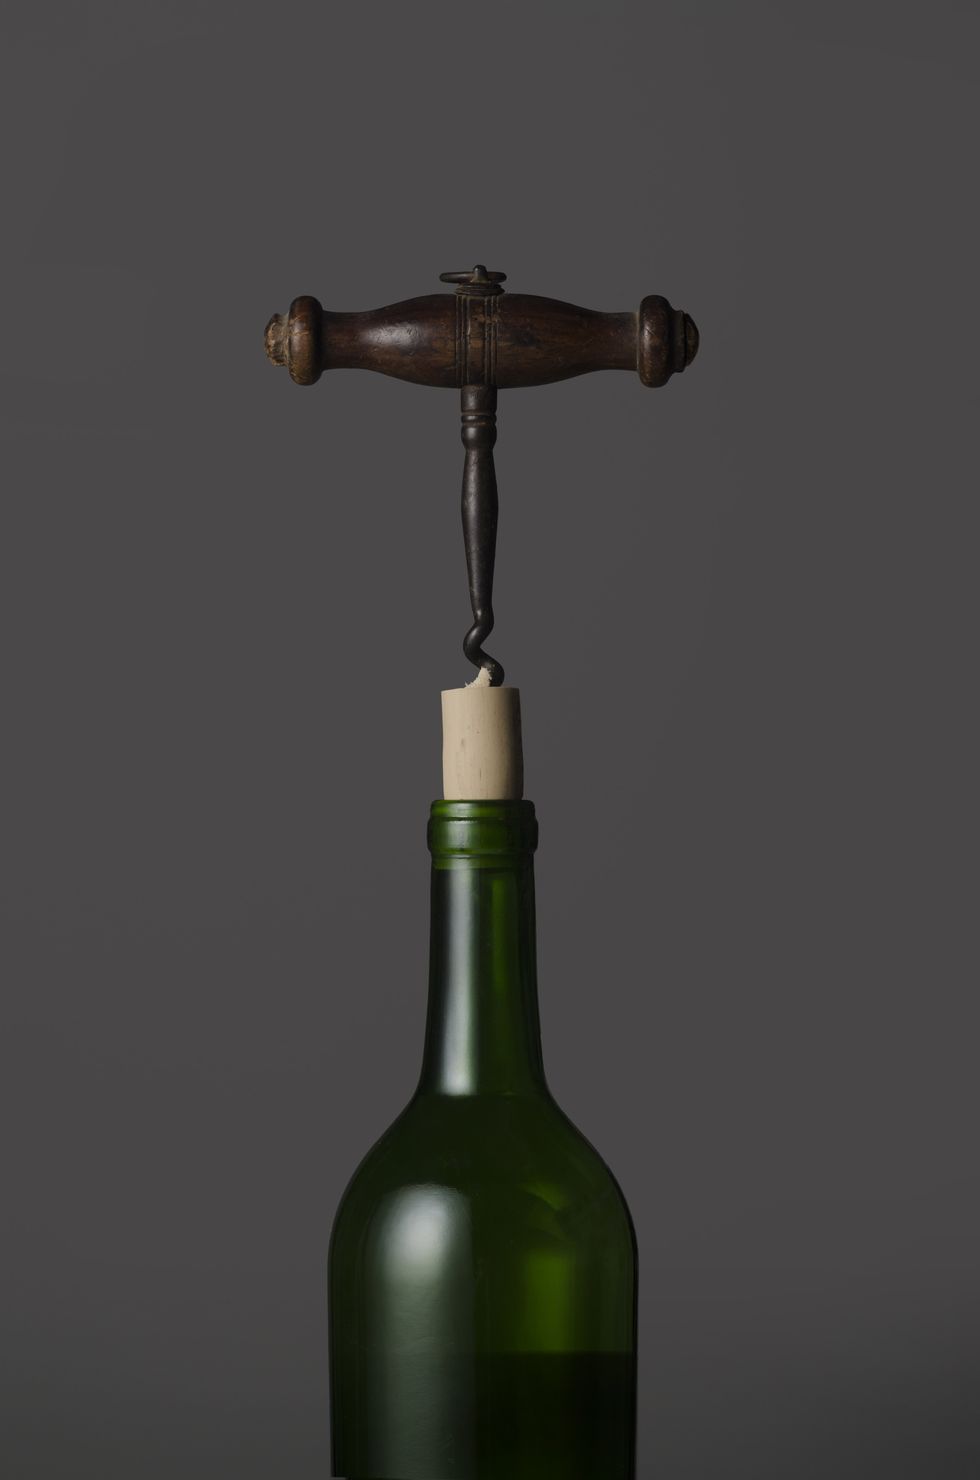 Wine Bottle With Antique Wood Corkscrew